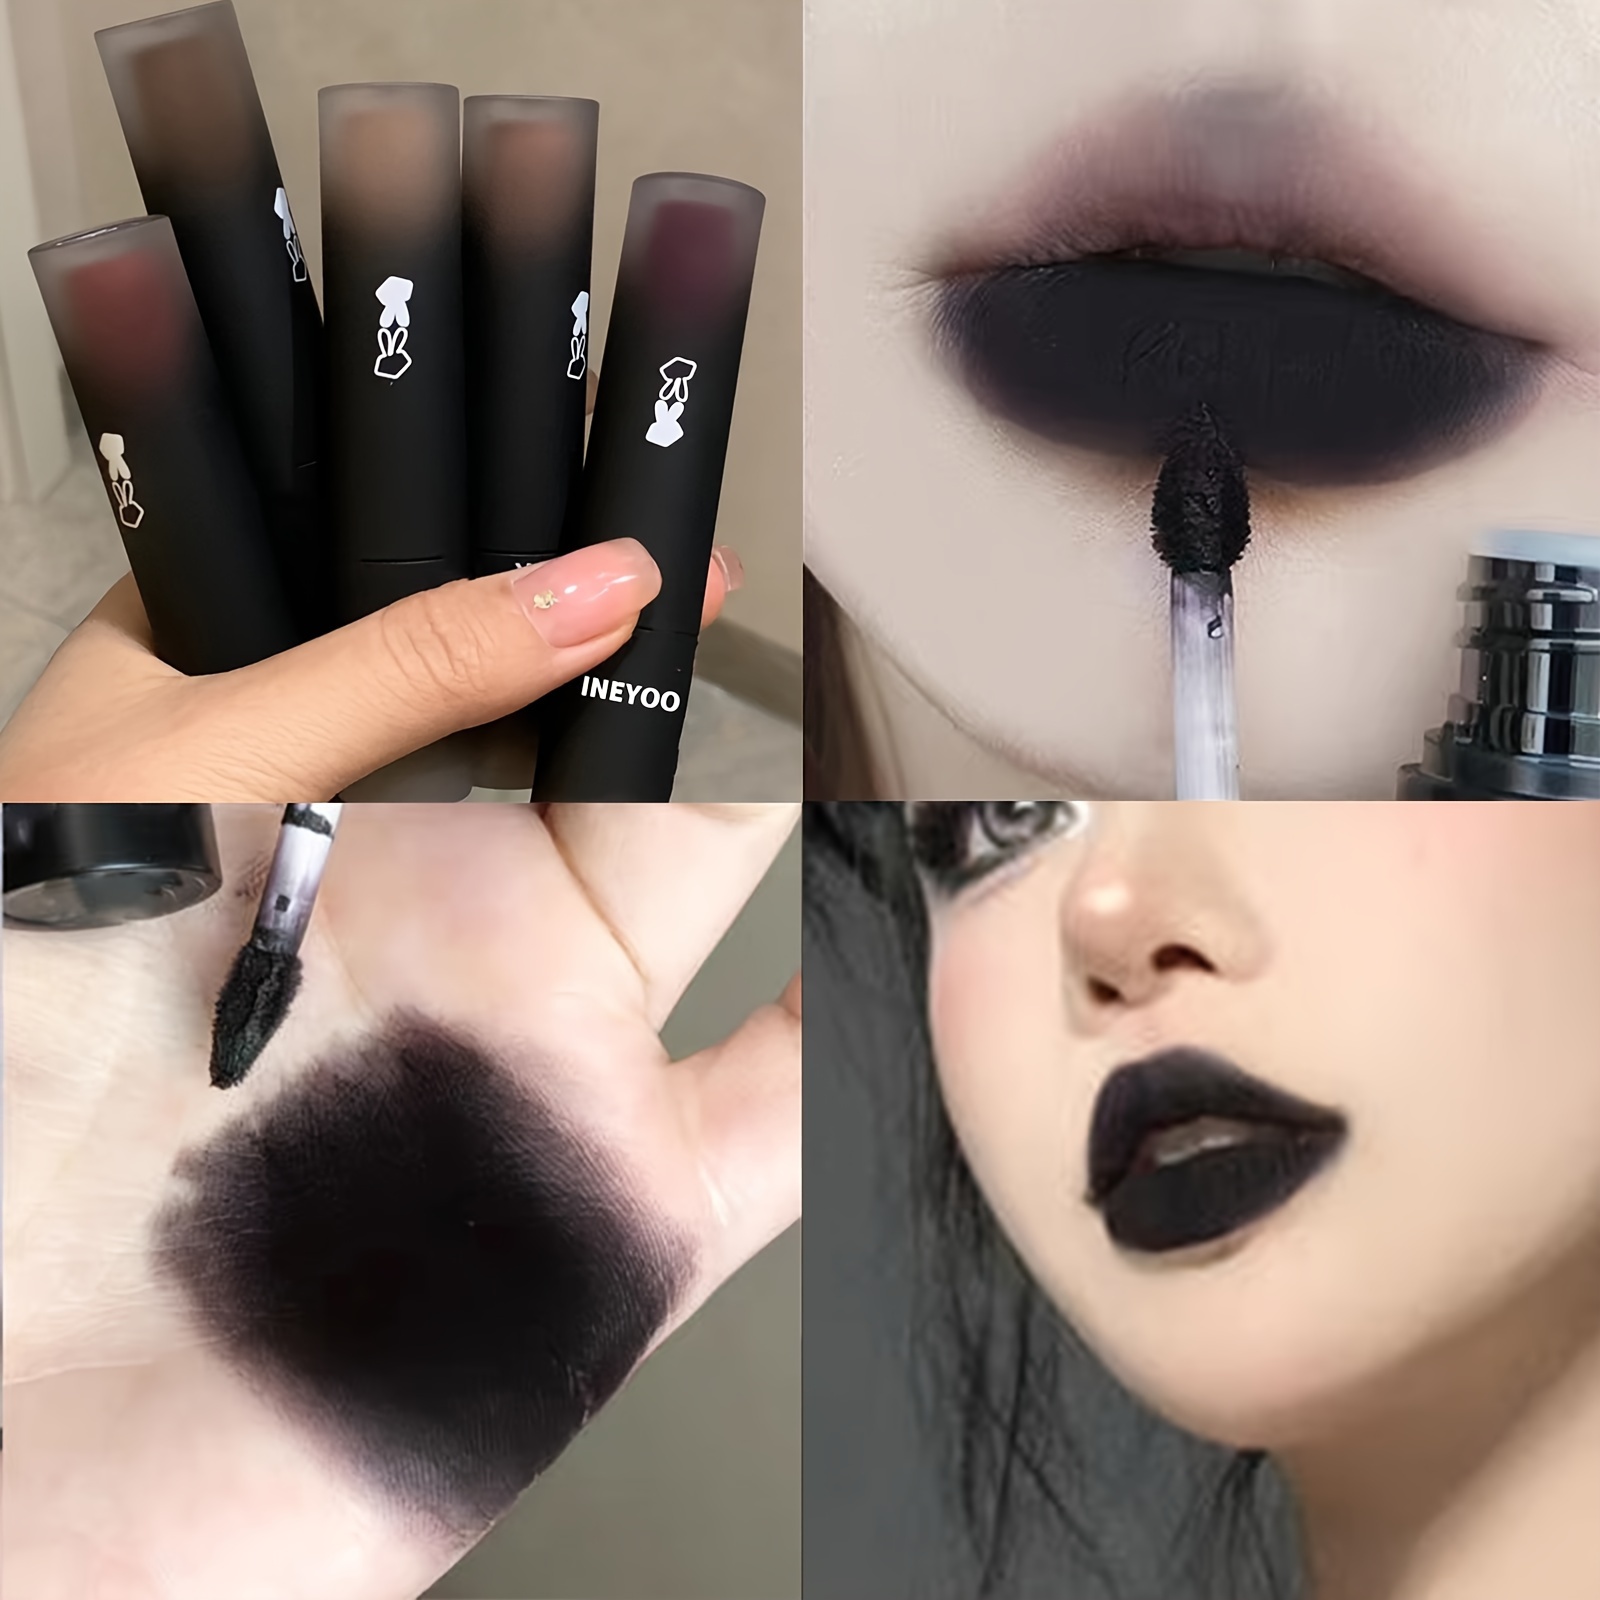 

Ineyoo Velvet Lip Glaze, Elegant Gothic Black Matte Finish, Long-lasting Liquid Lipstick, Waterproof, Smudge-proof, Party Lip Makeup